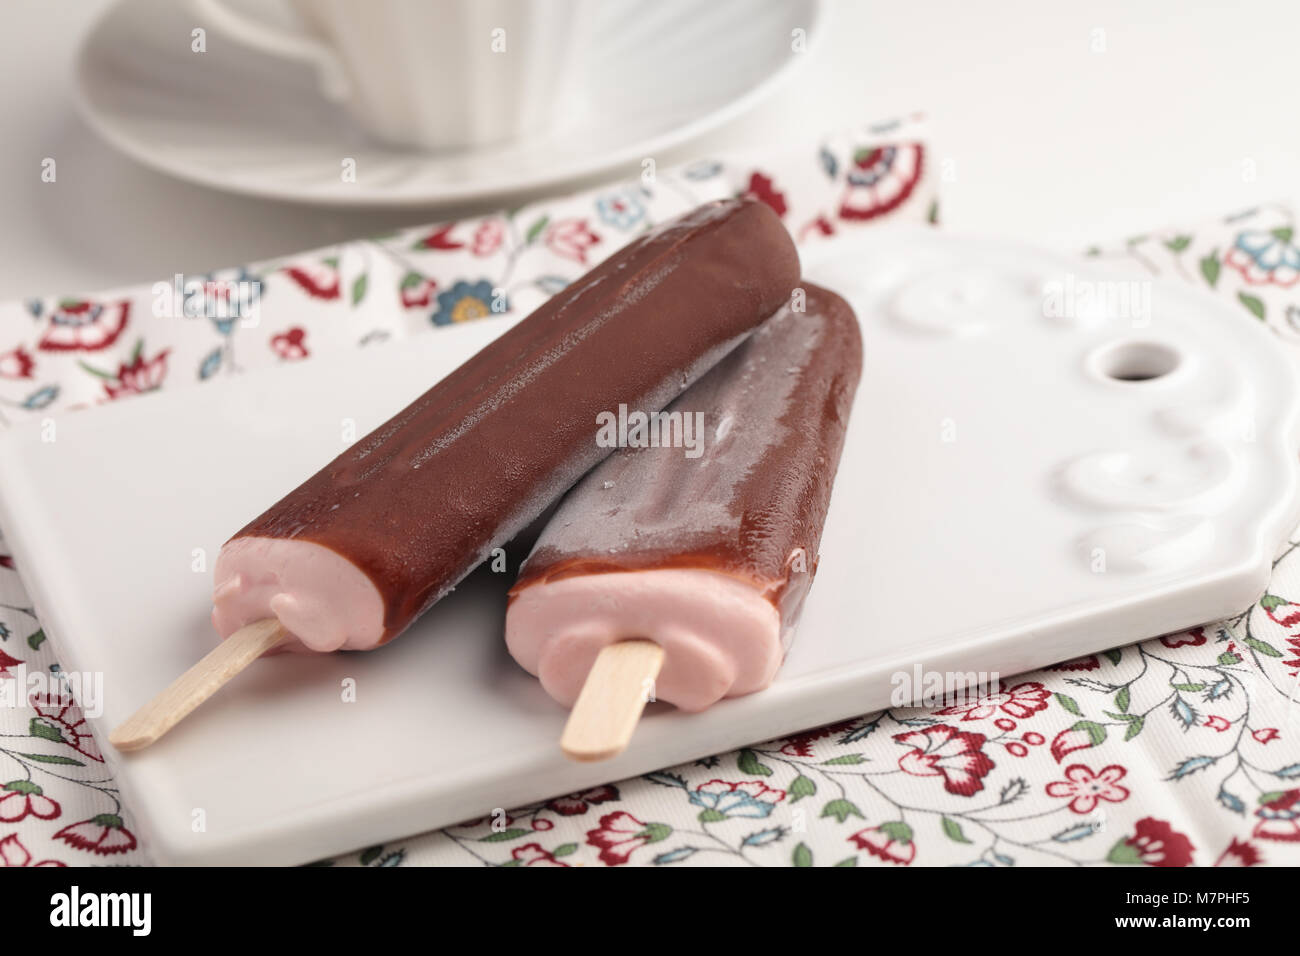 Ice cream bars coated with chocolate Stock Photo